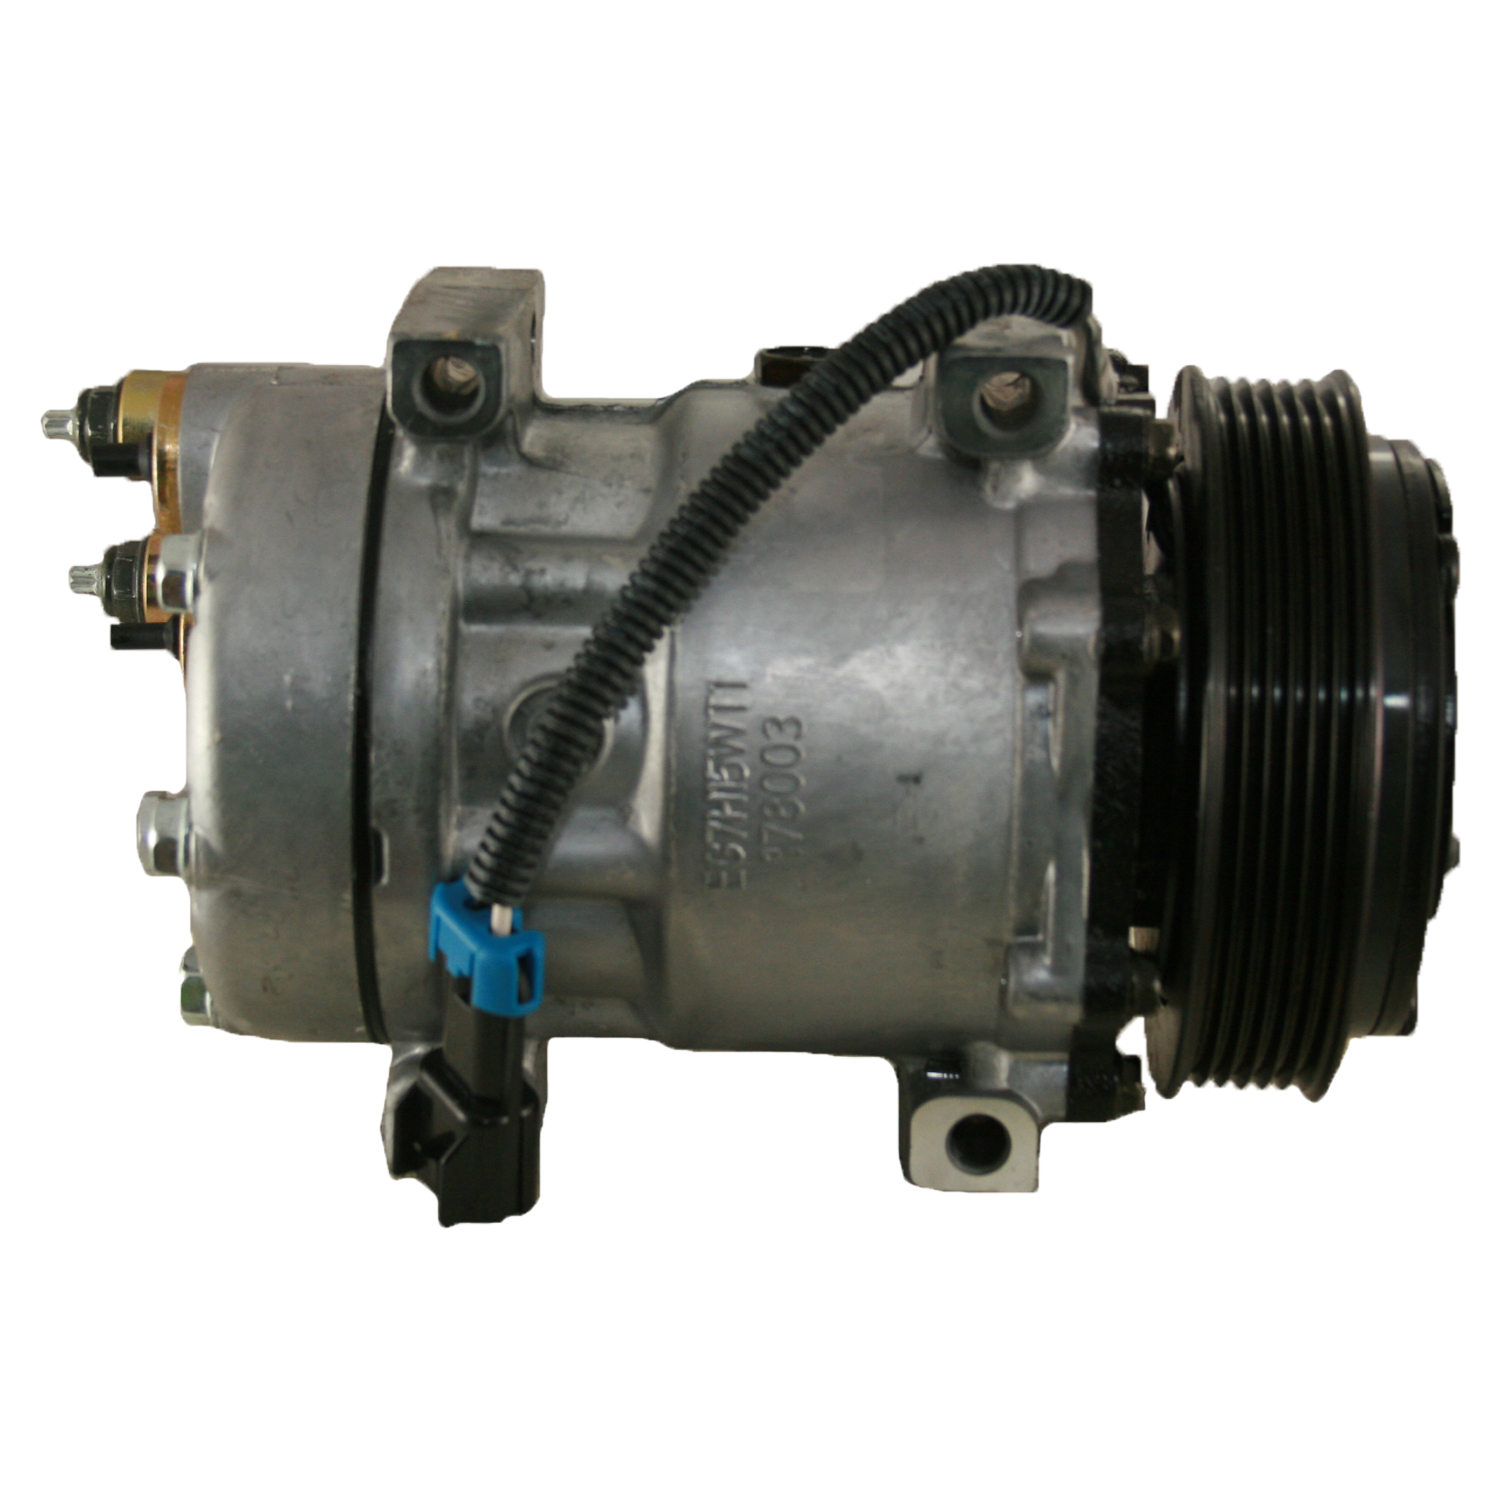 TCW Compressor 40598.601NEW New Product Image field_60b6a13a6e67c